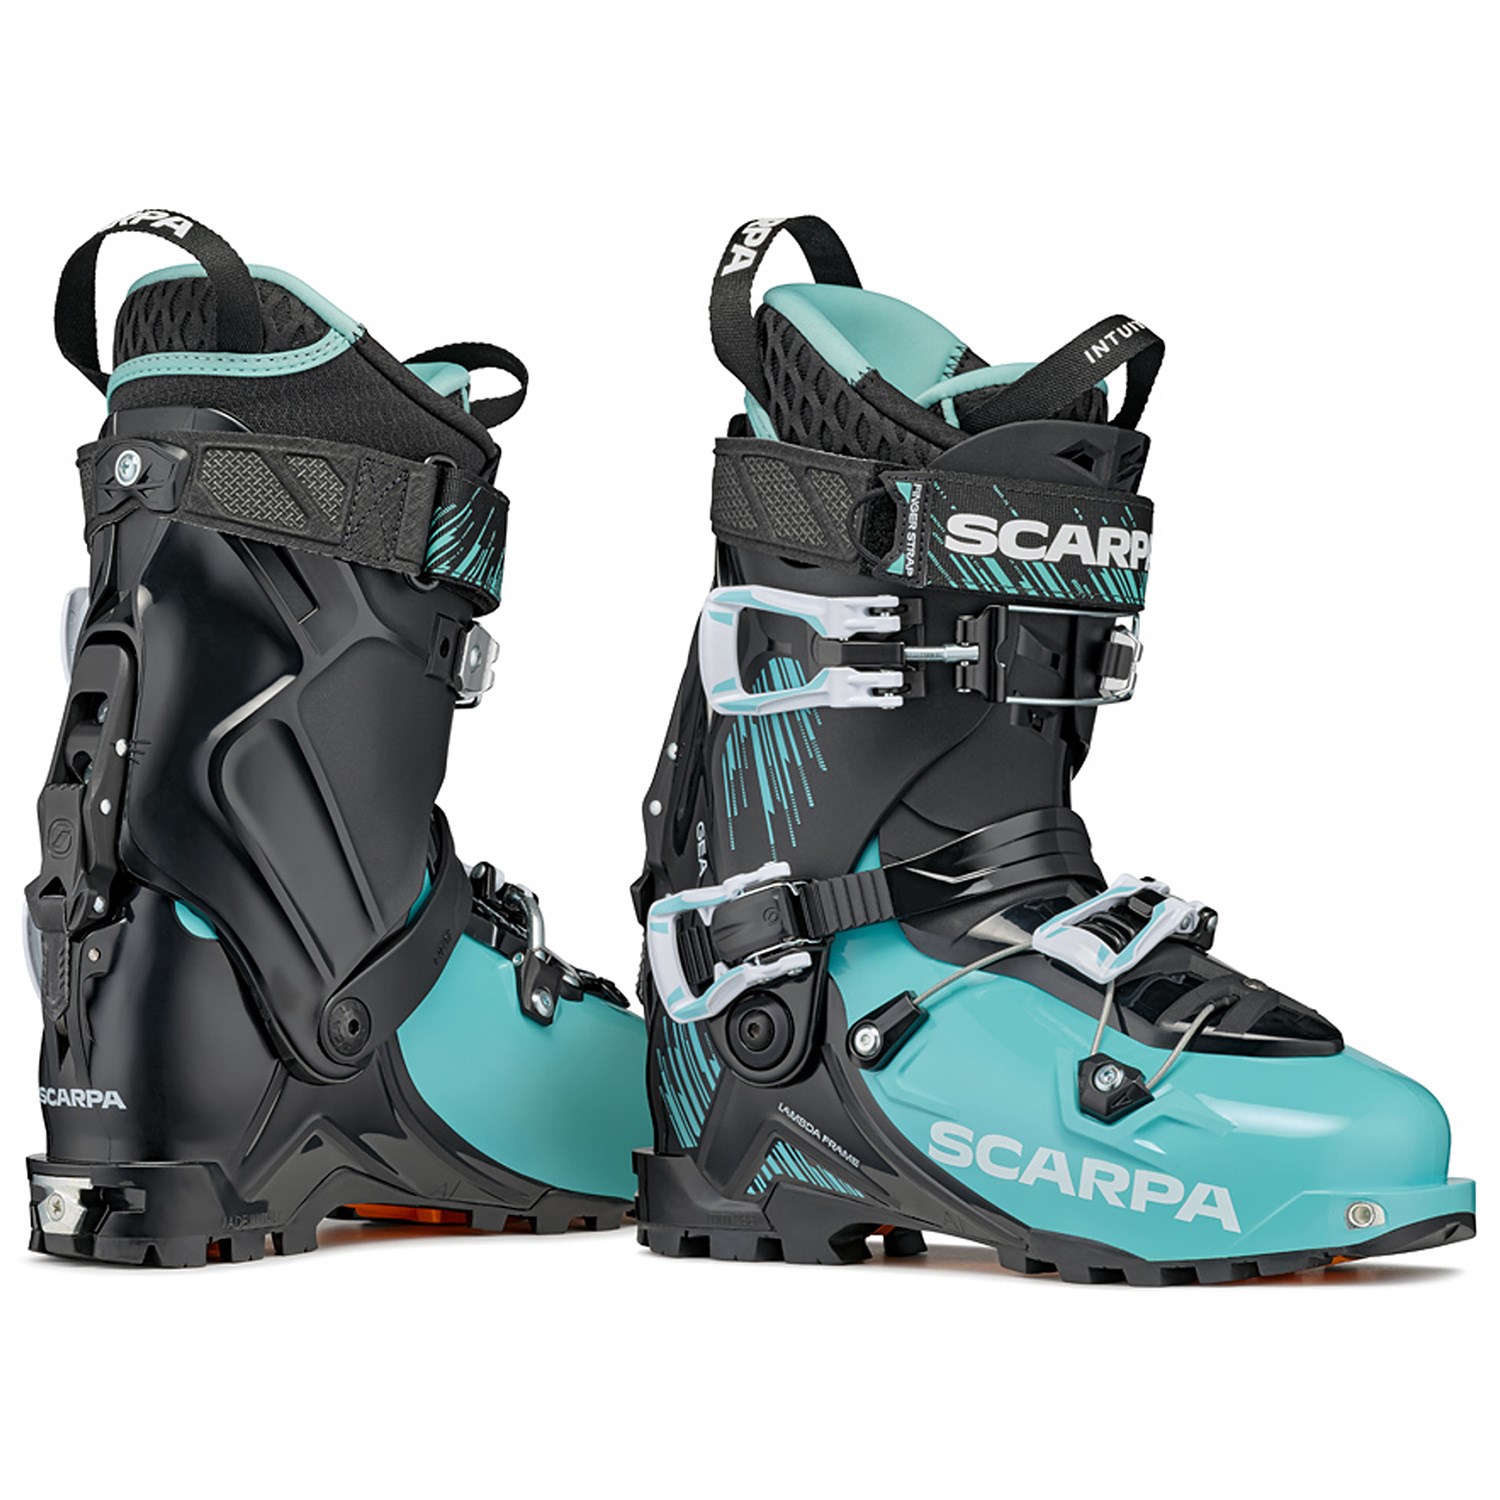 New $679 Scarpa Women’s Diva Alpine Touring Ski Boots Mondo Size 25 